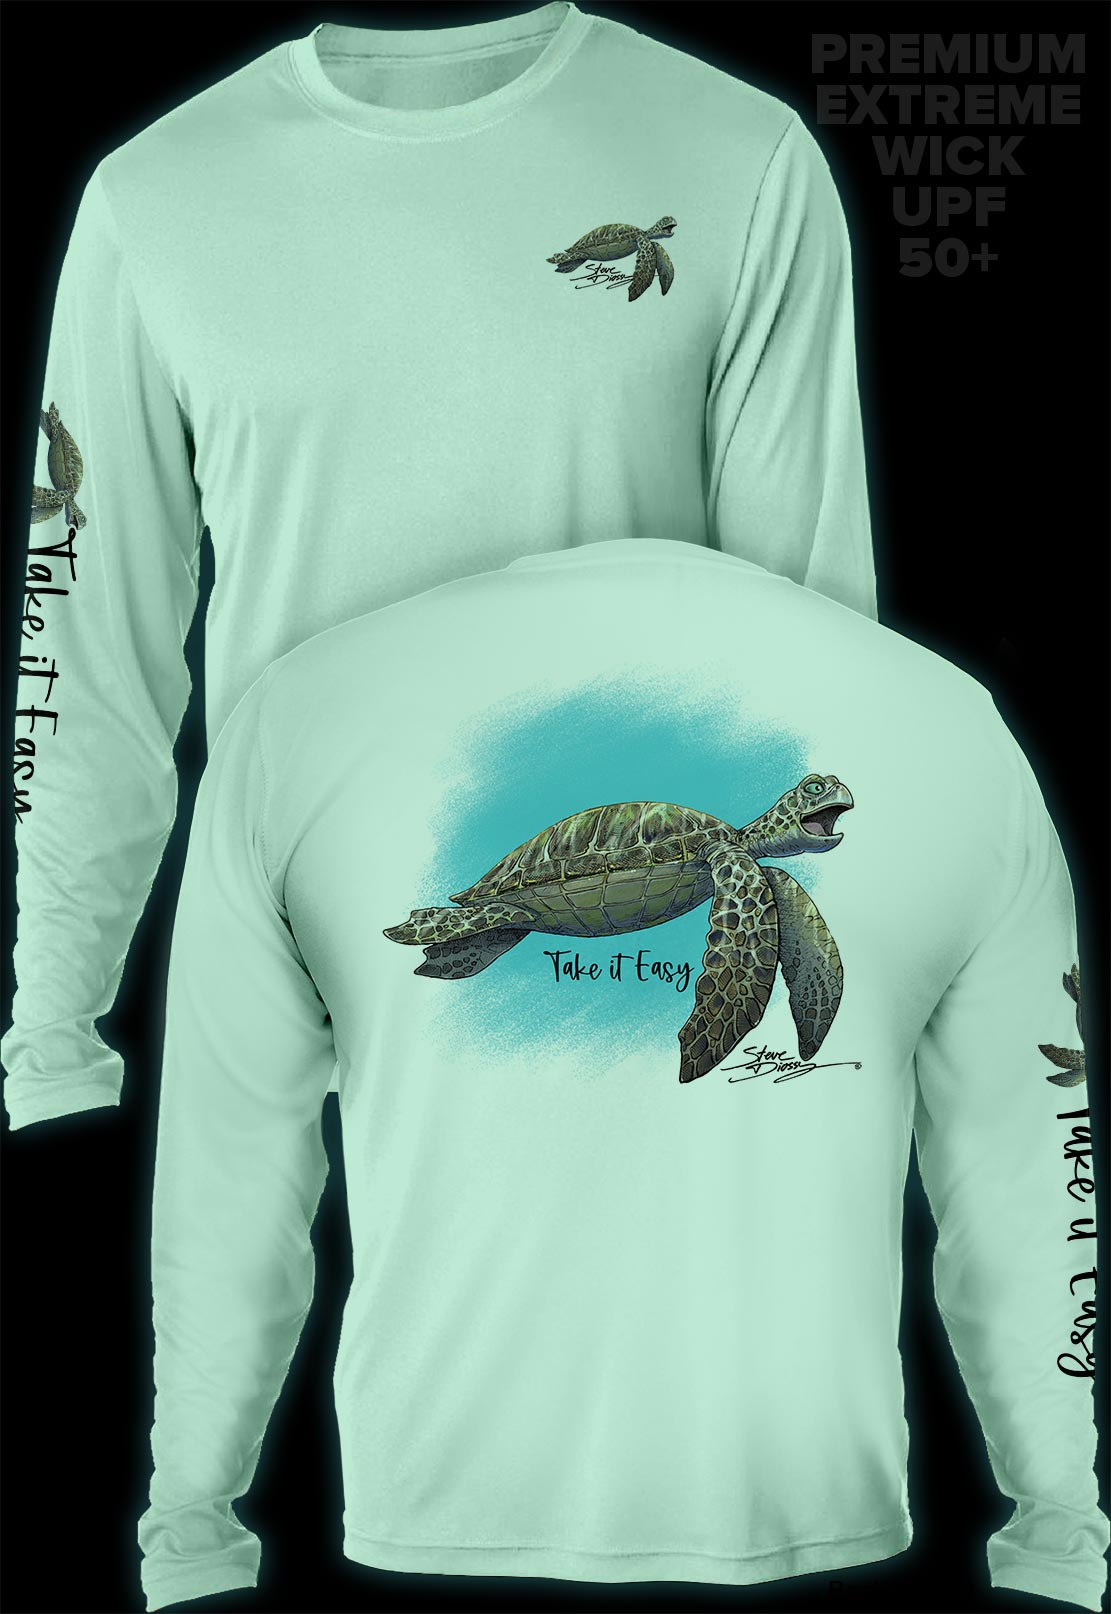 "Take It Easy Turtle"- Men's Extreme Wick Long Sleeve Performance Shirt ᴜᴘꜰ-ᴛᴇᴇ